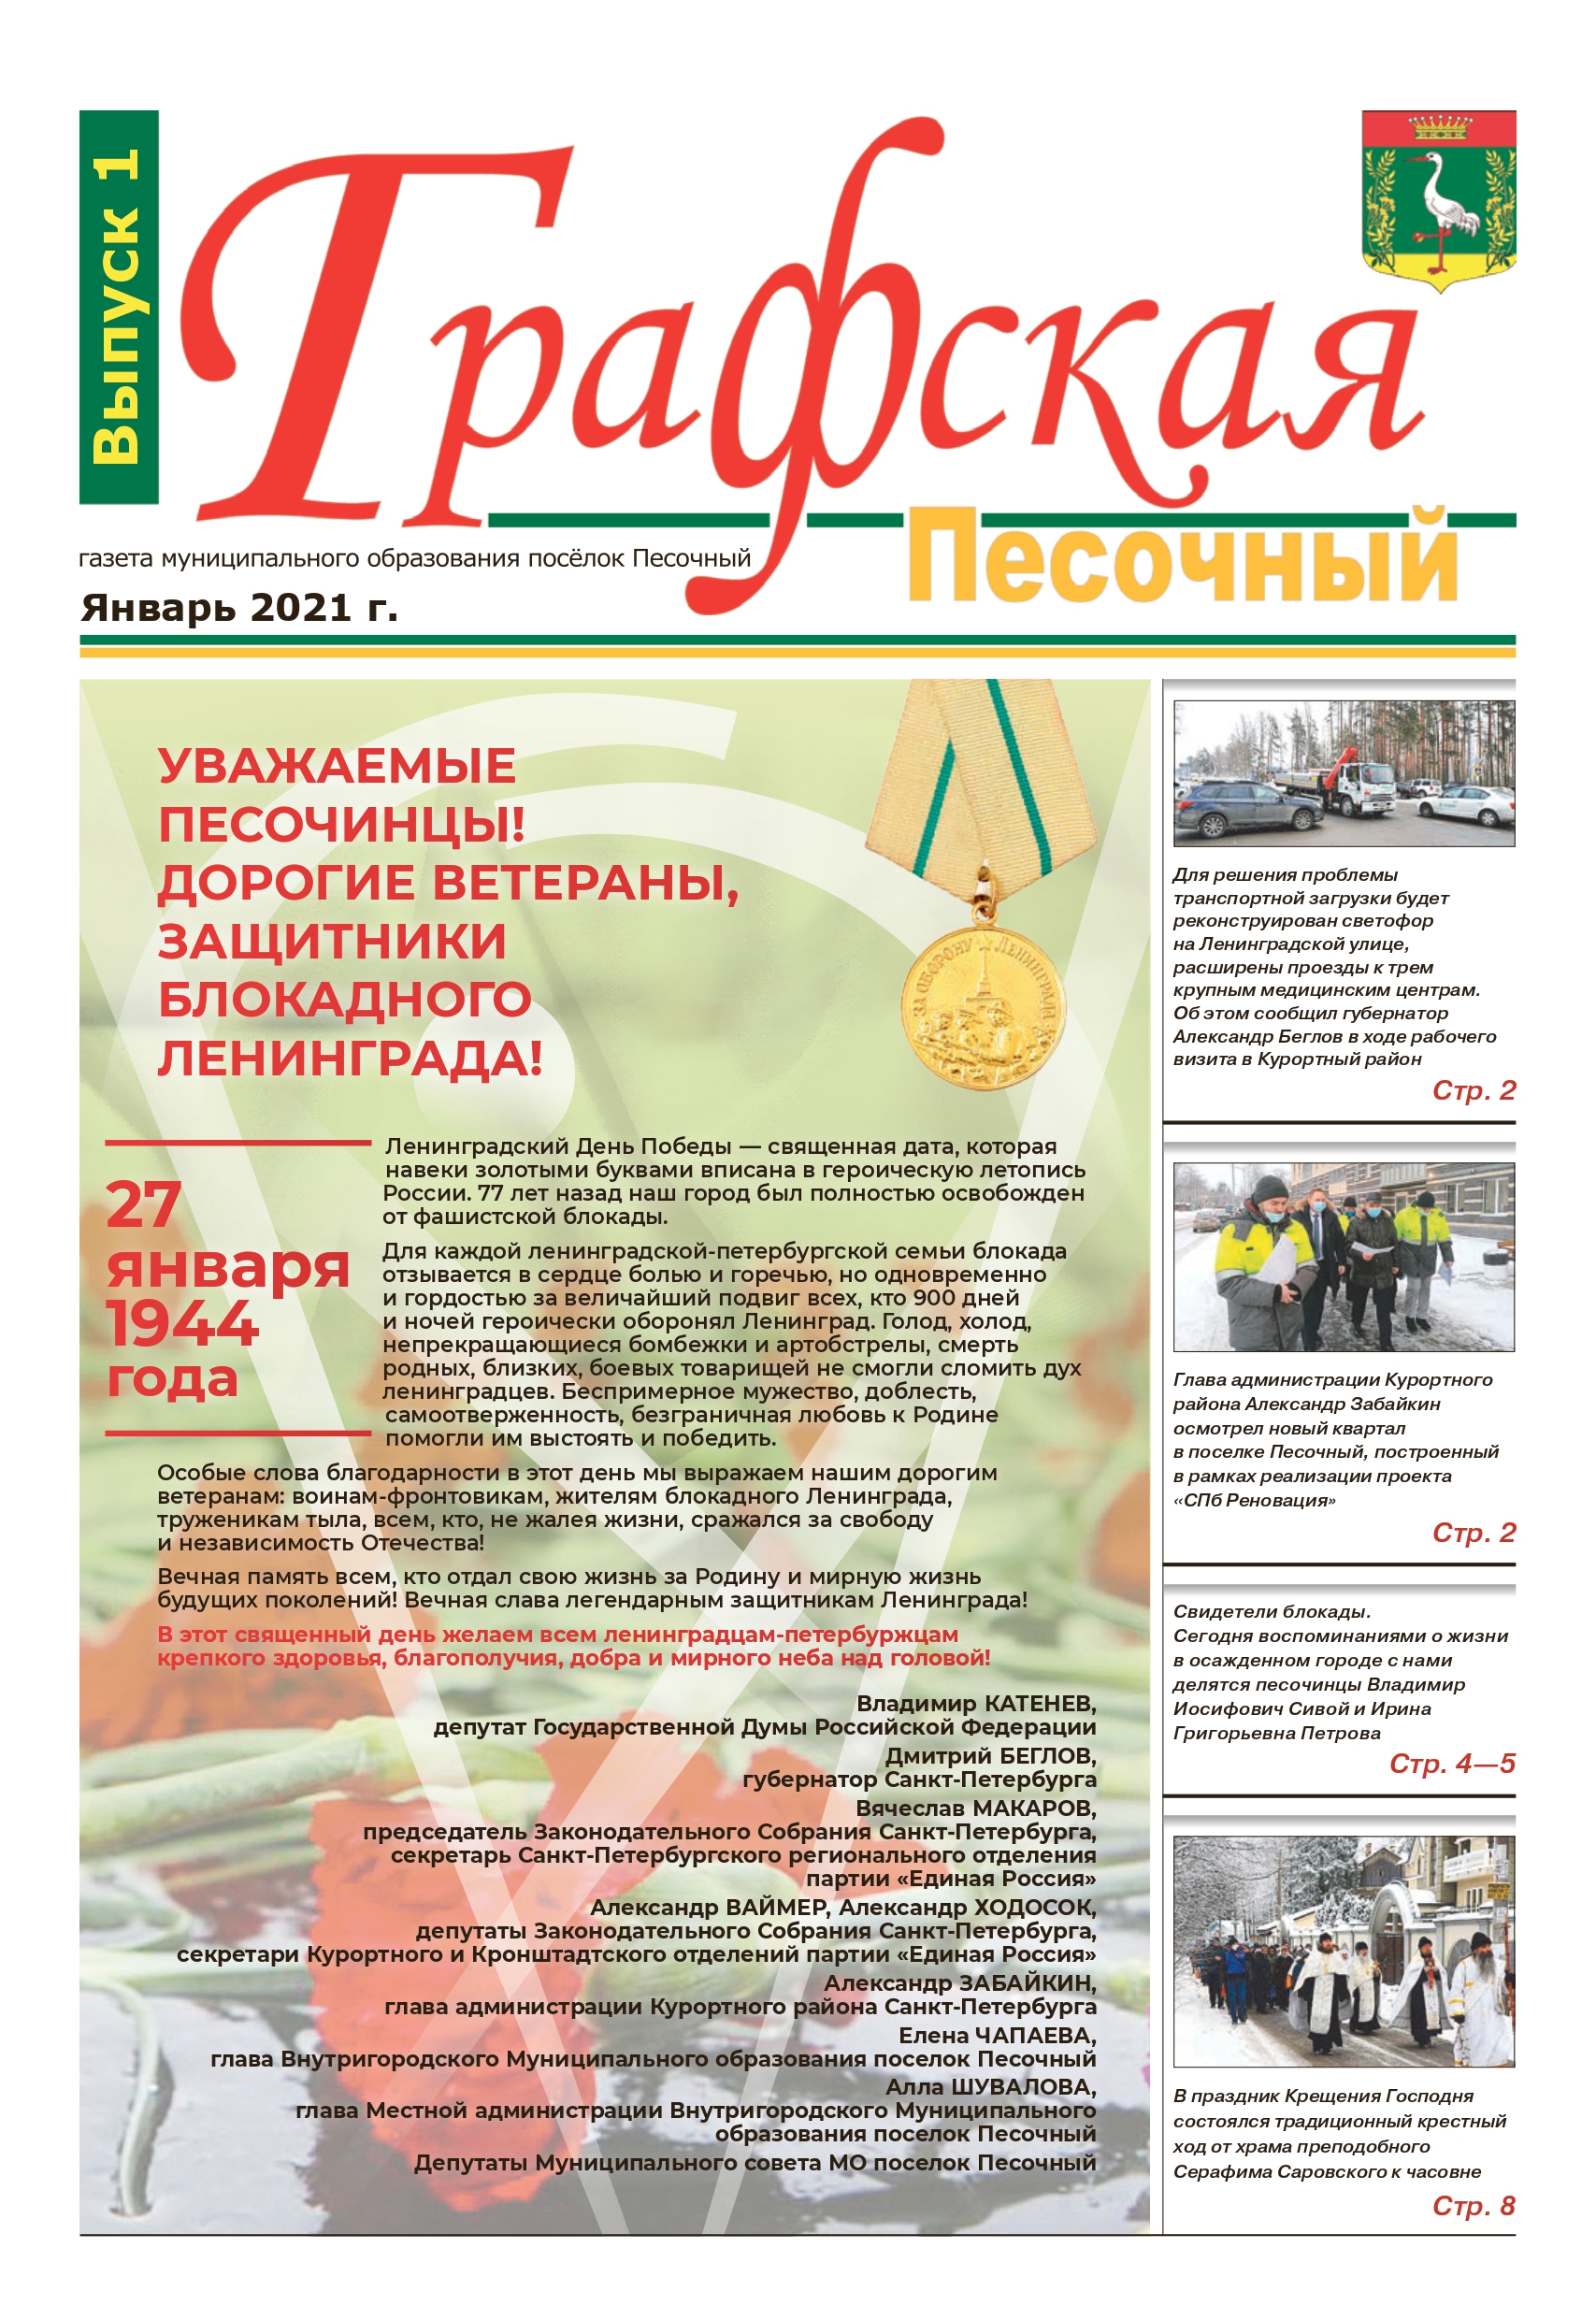 Газета "Графская" выпуск № 1, январь 2021